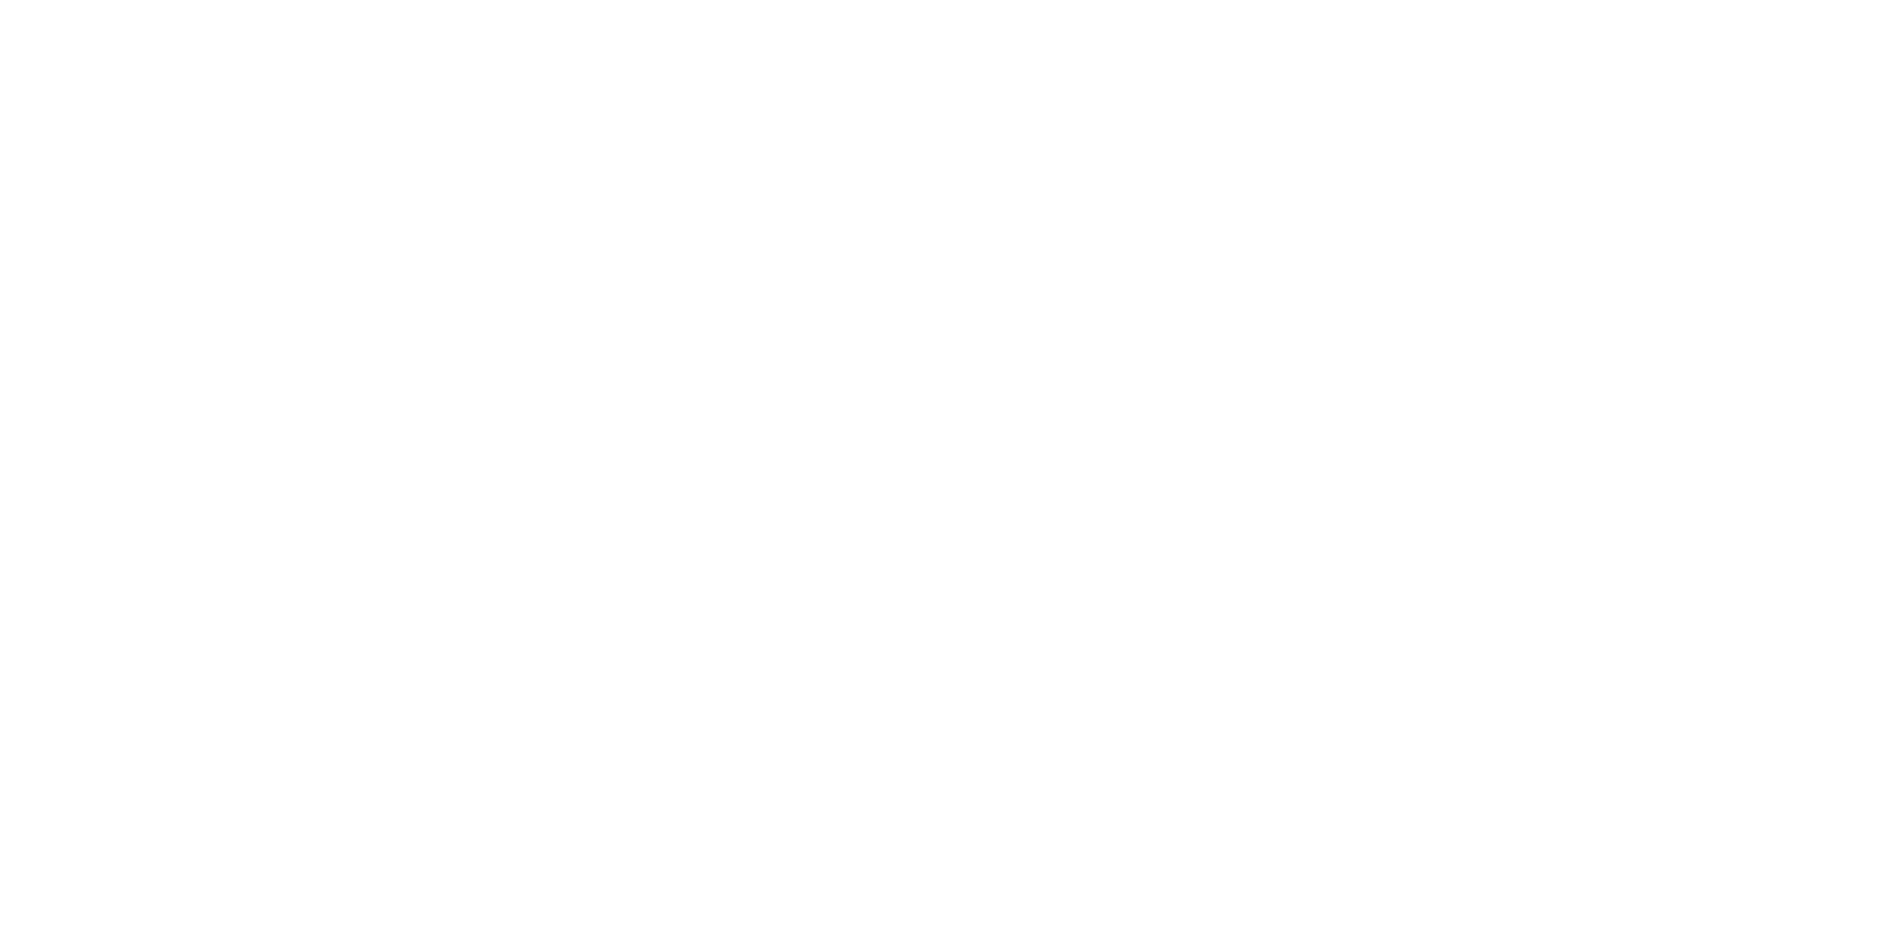 Brand logos for GE Appliances, a Haier Company